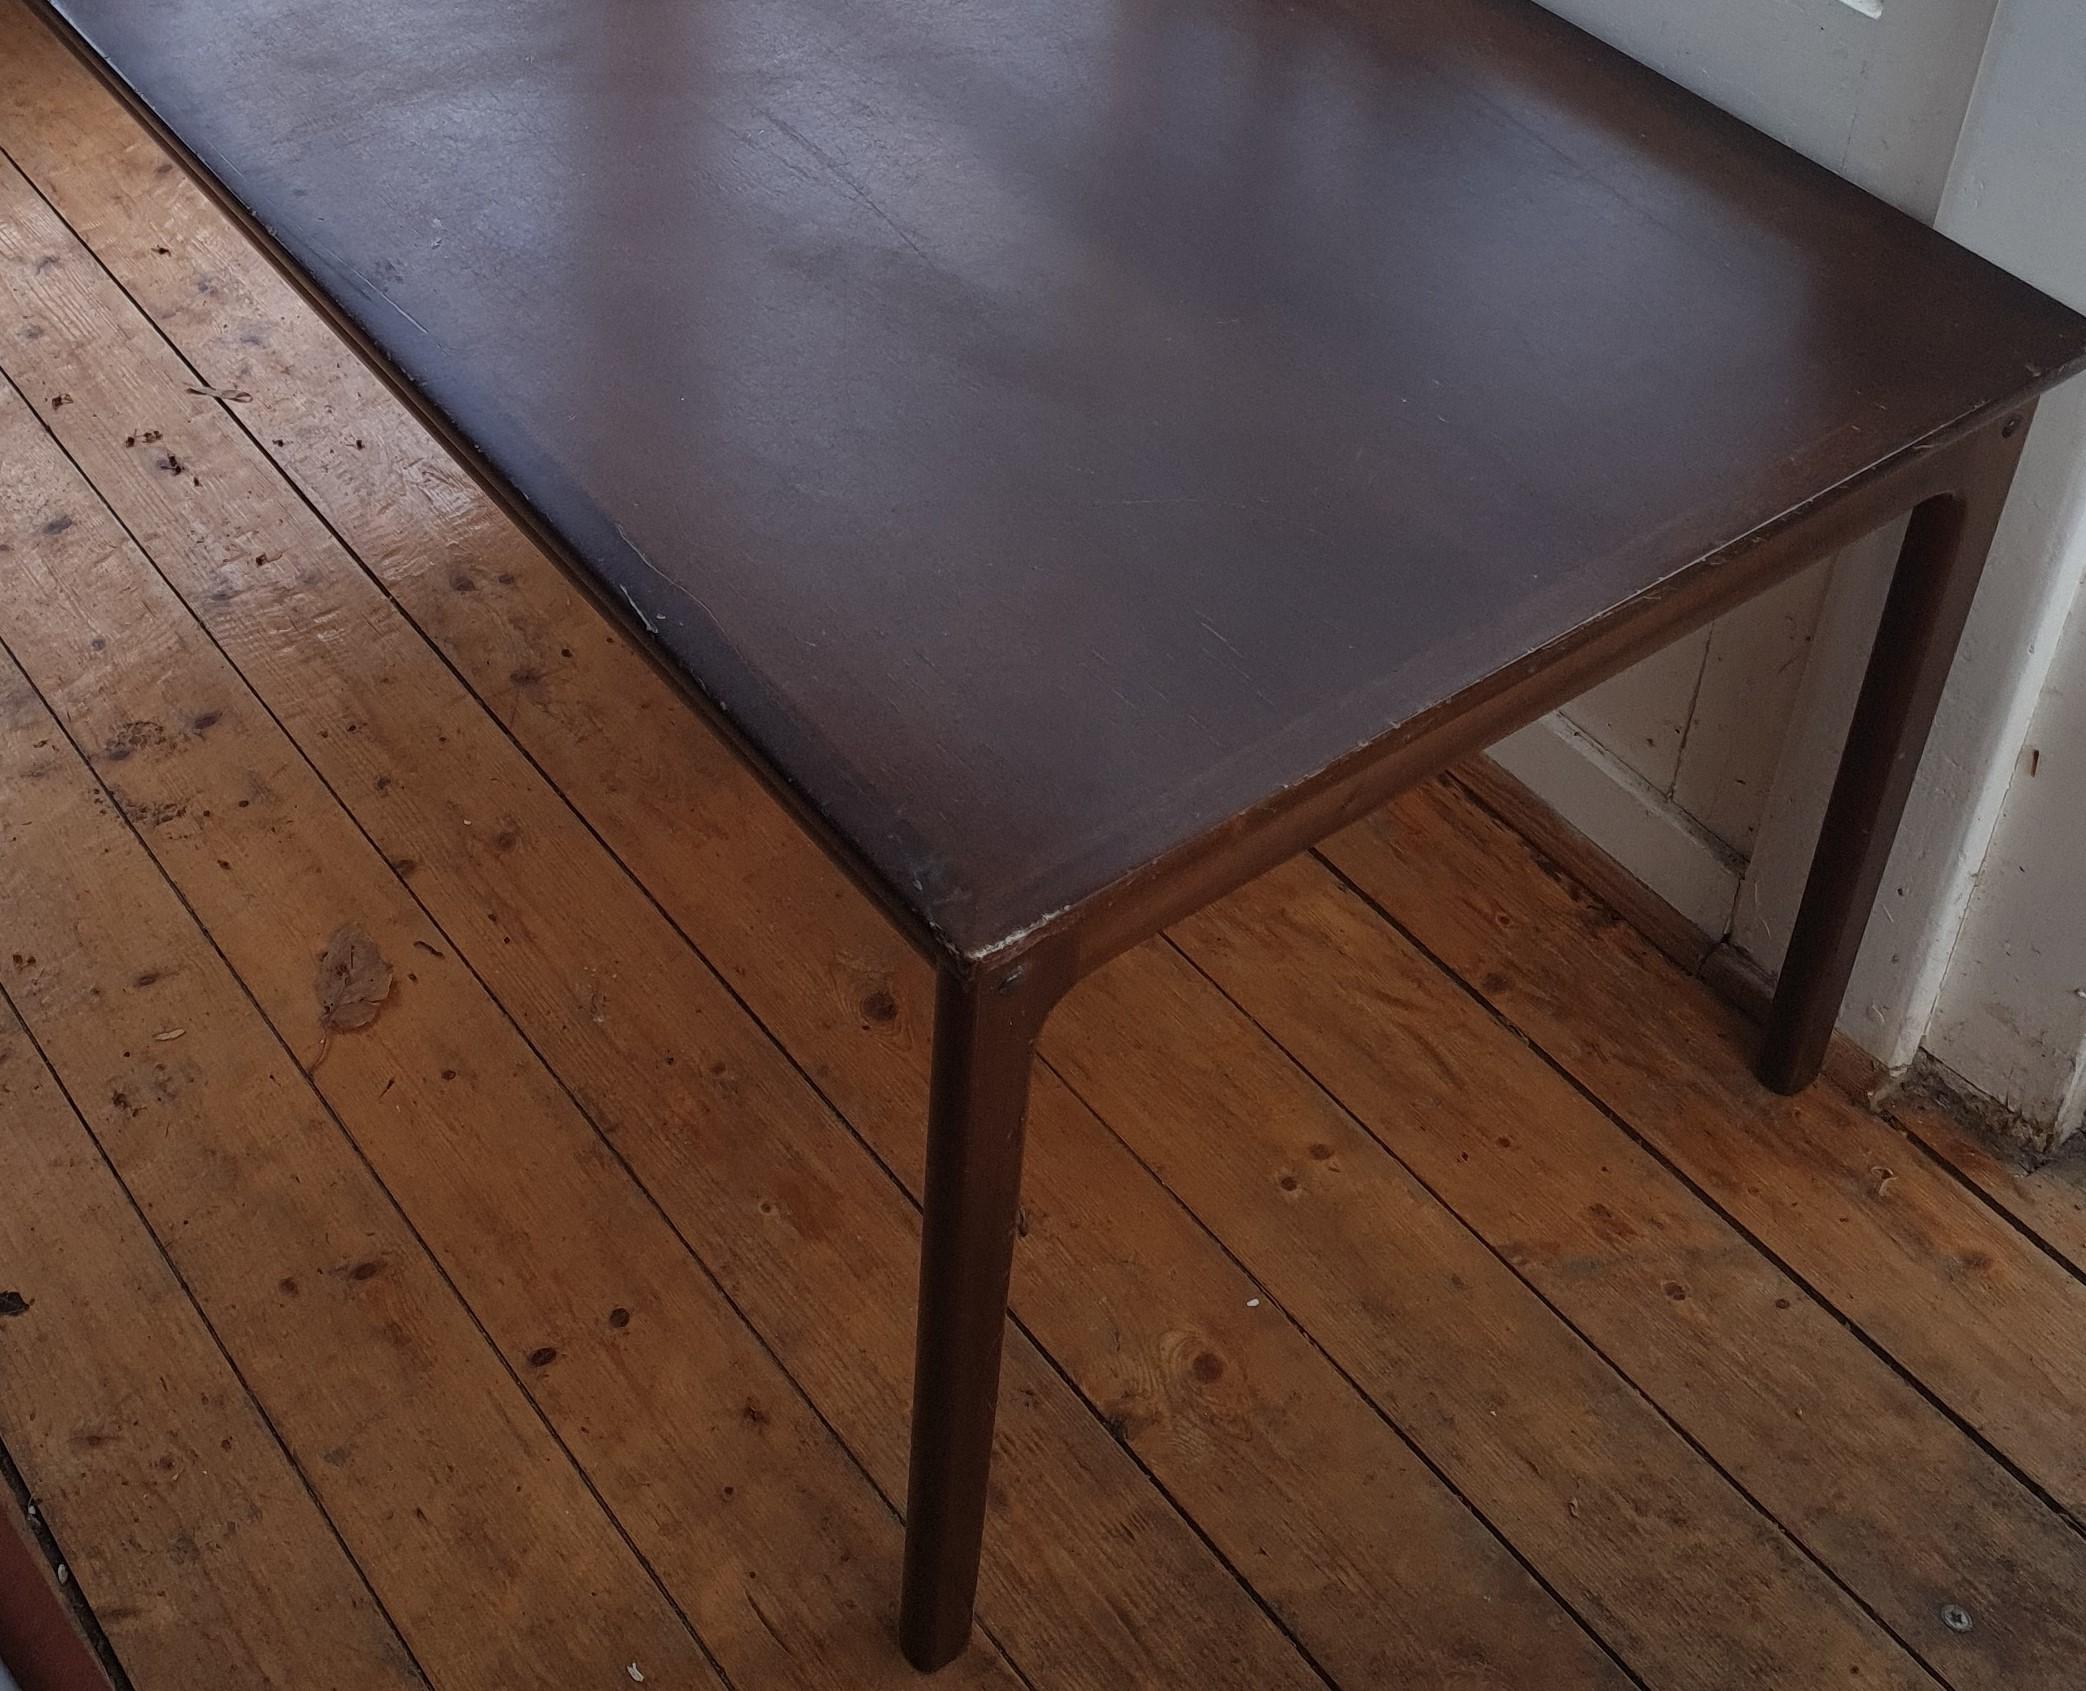 Ole Wancher  palisander coffee table  60ies  Denmark In Fair Condition For Sale In Berlin, DE